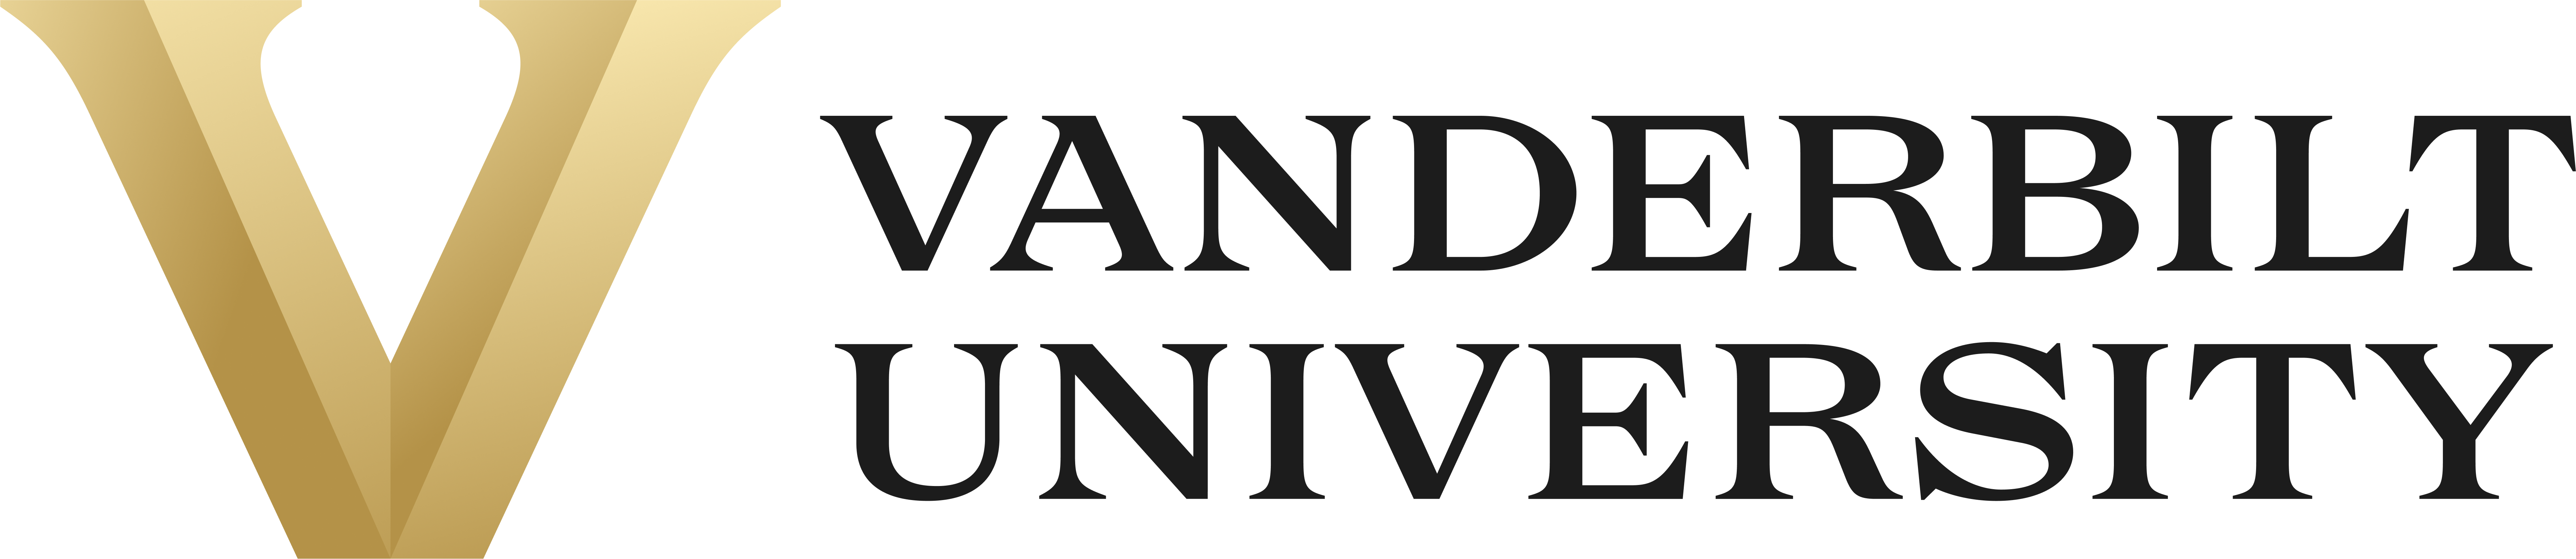 Vanderbilt University - Postdoctoral Trainees